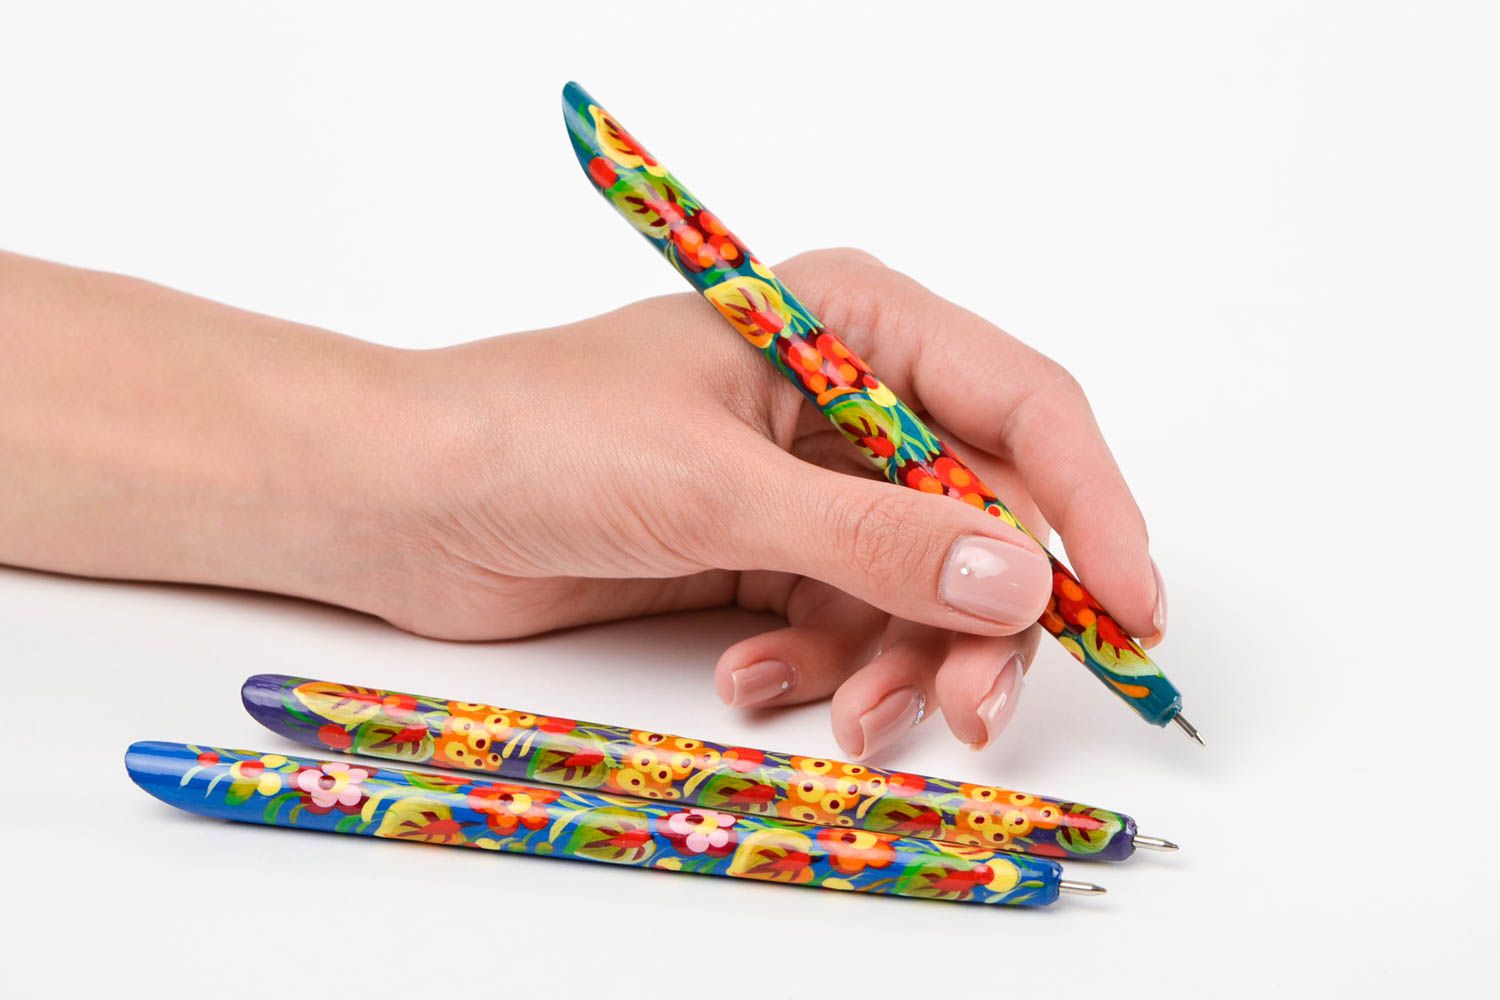 Handmade pen designer pen wooden pen unusual pen decor ideas gift ideas photo 5